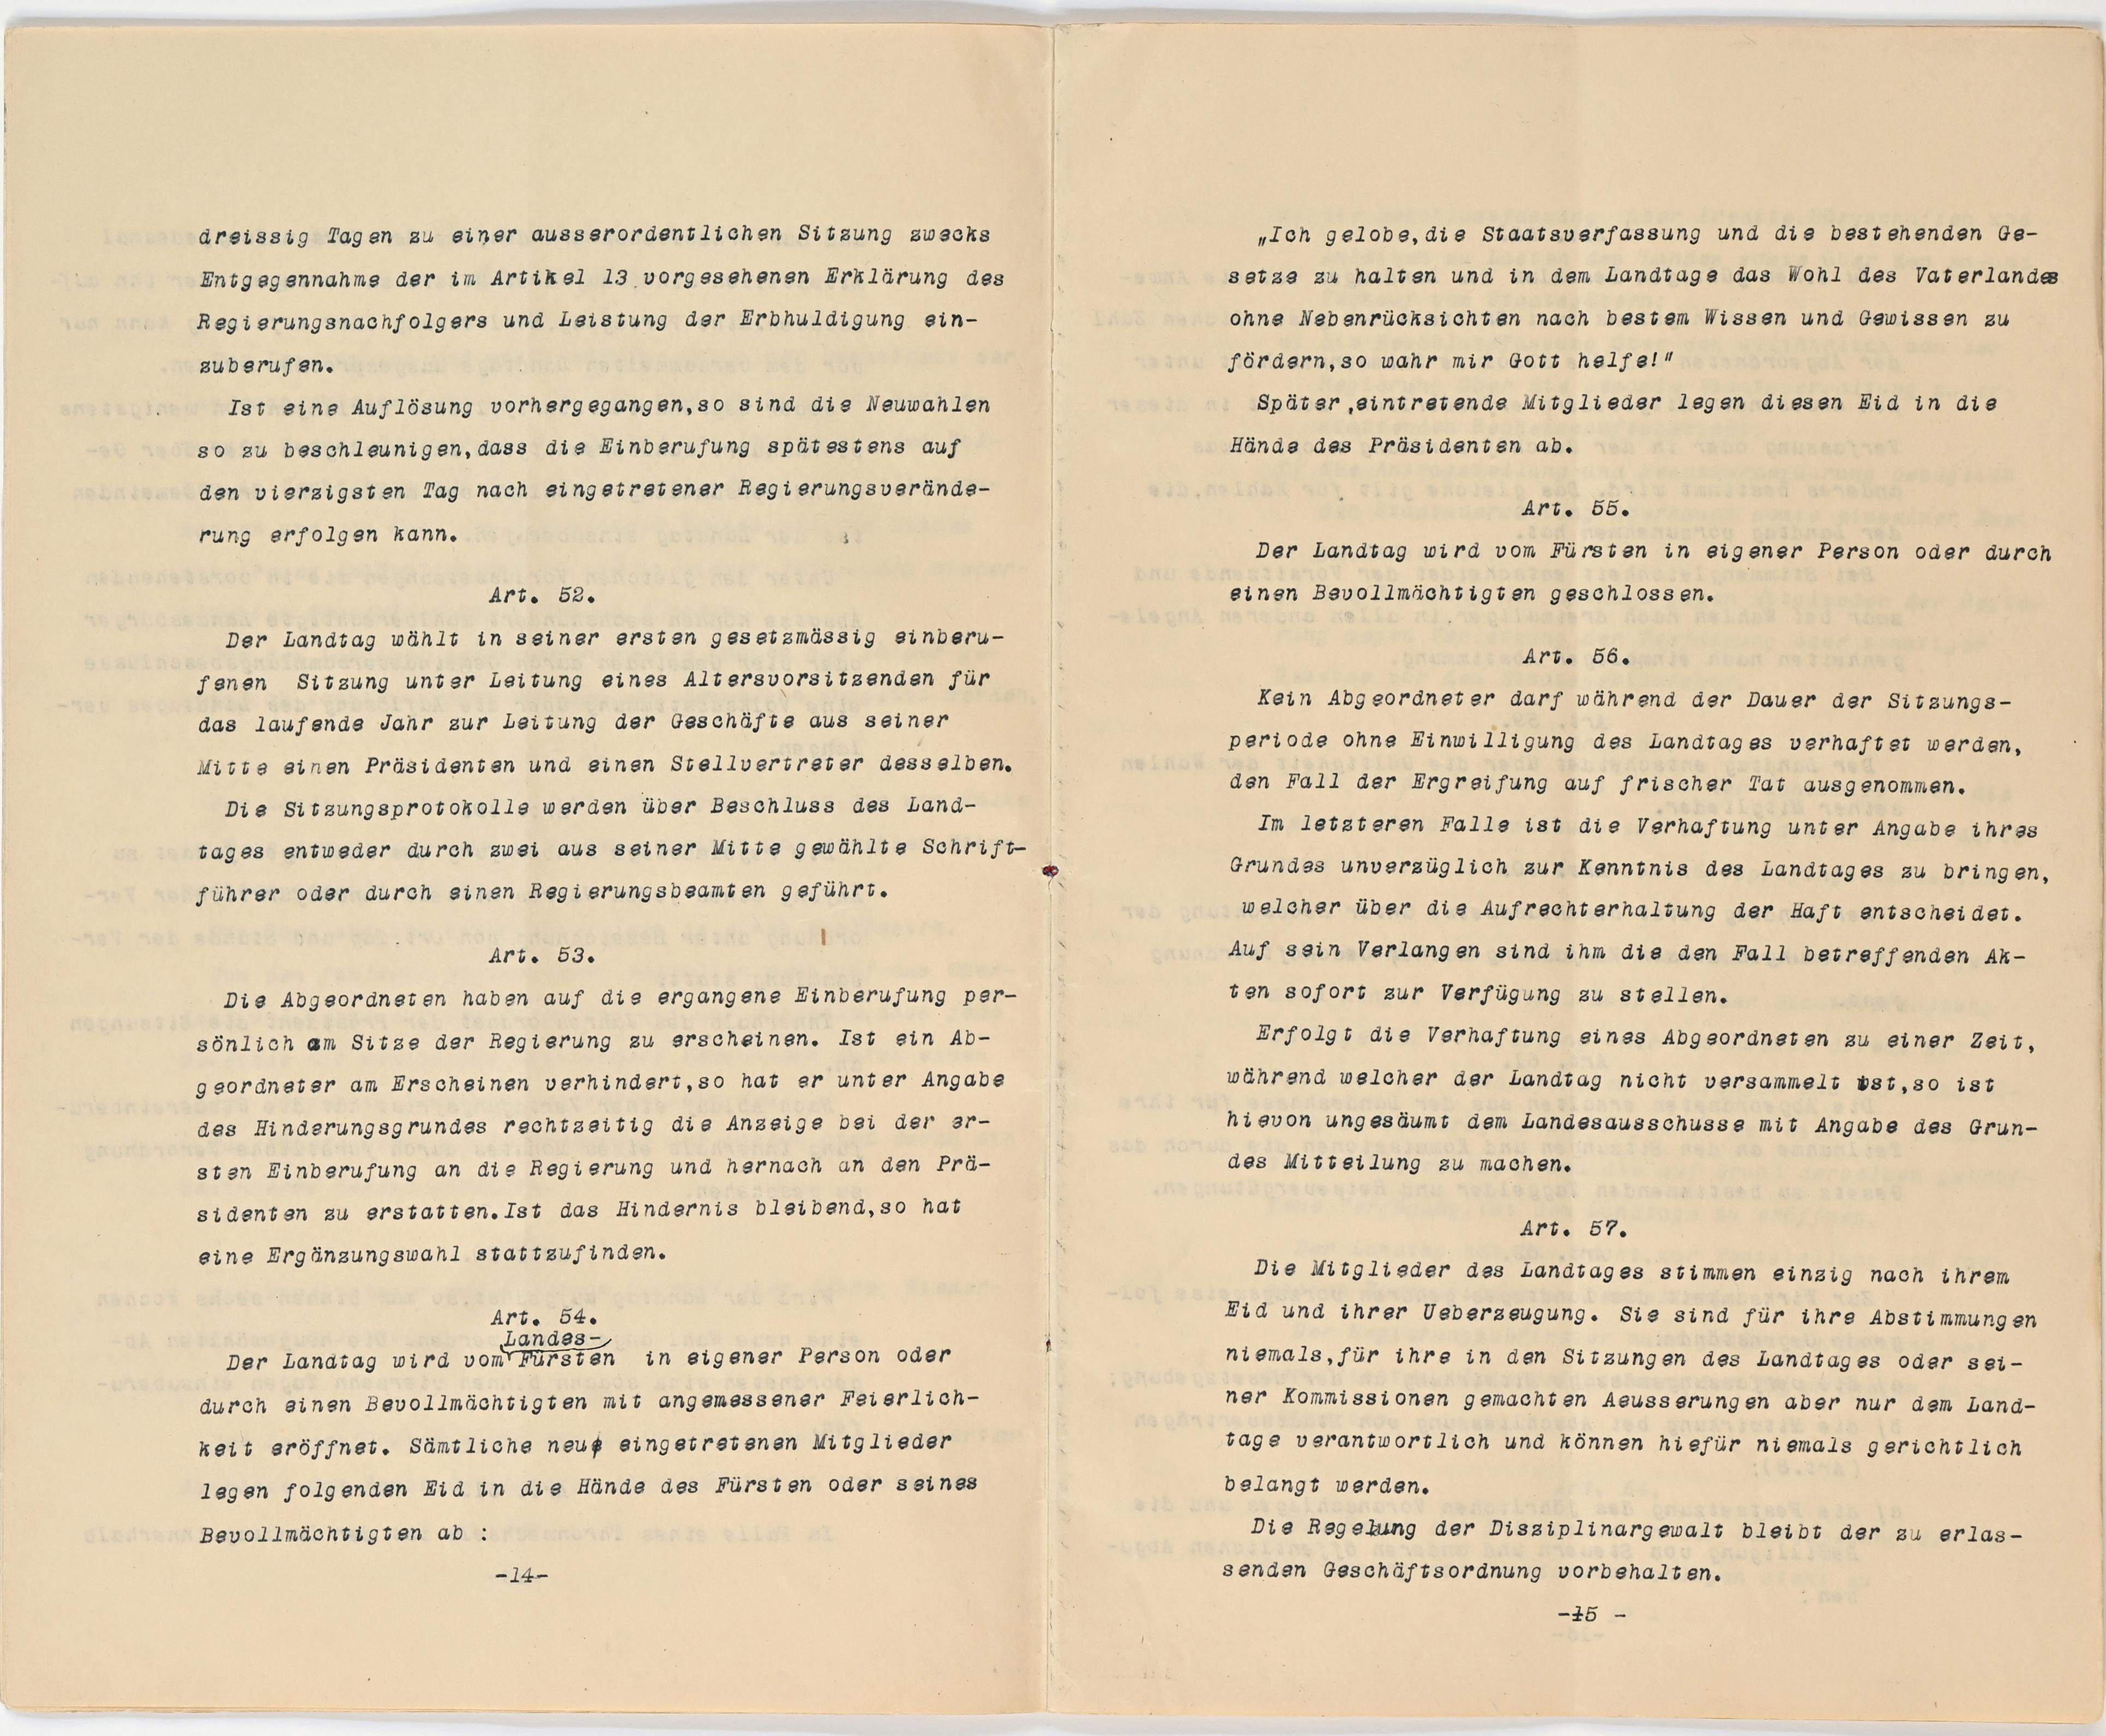 Verfassung 1921 Art. 52 bis Art. 57